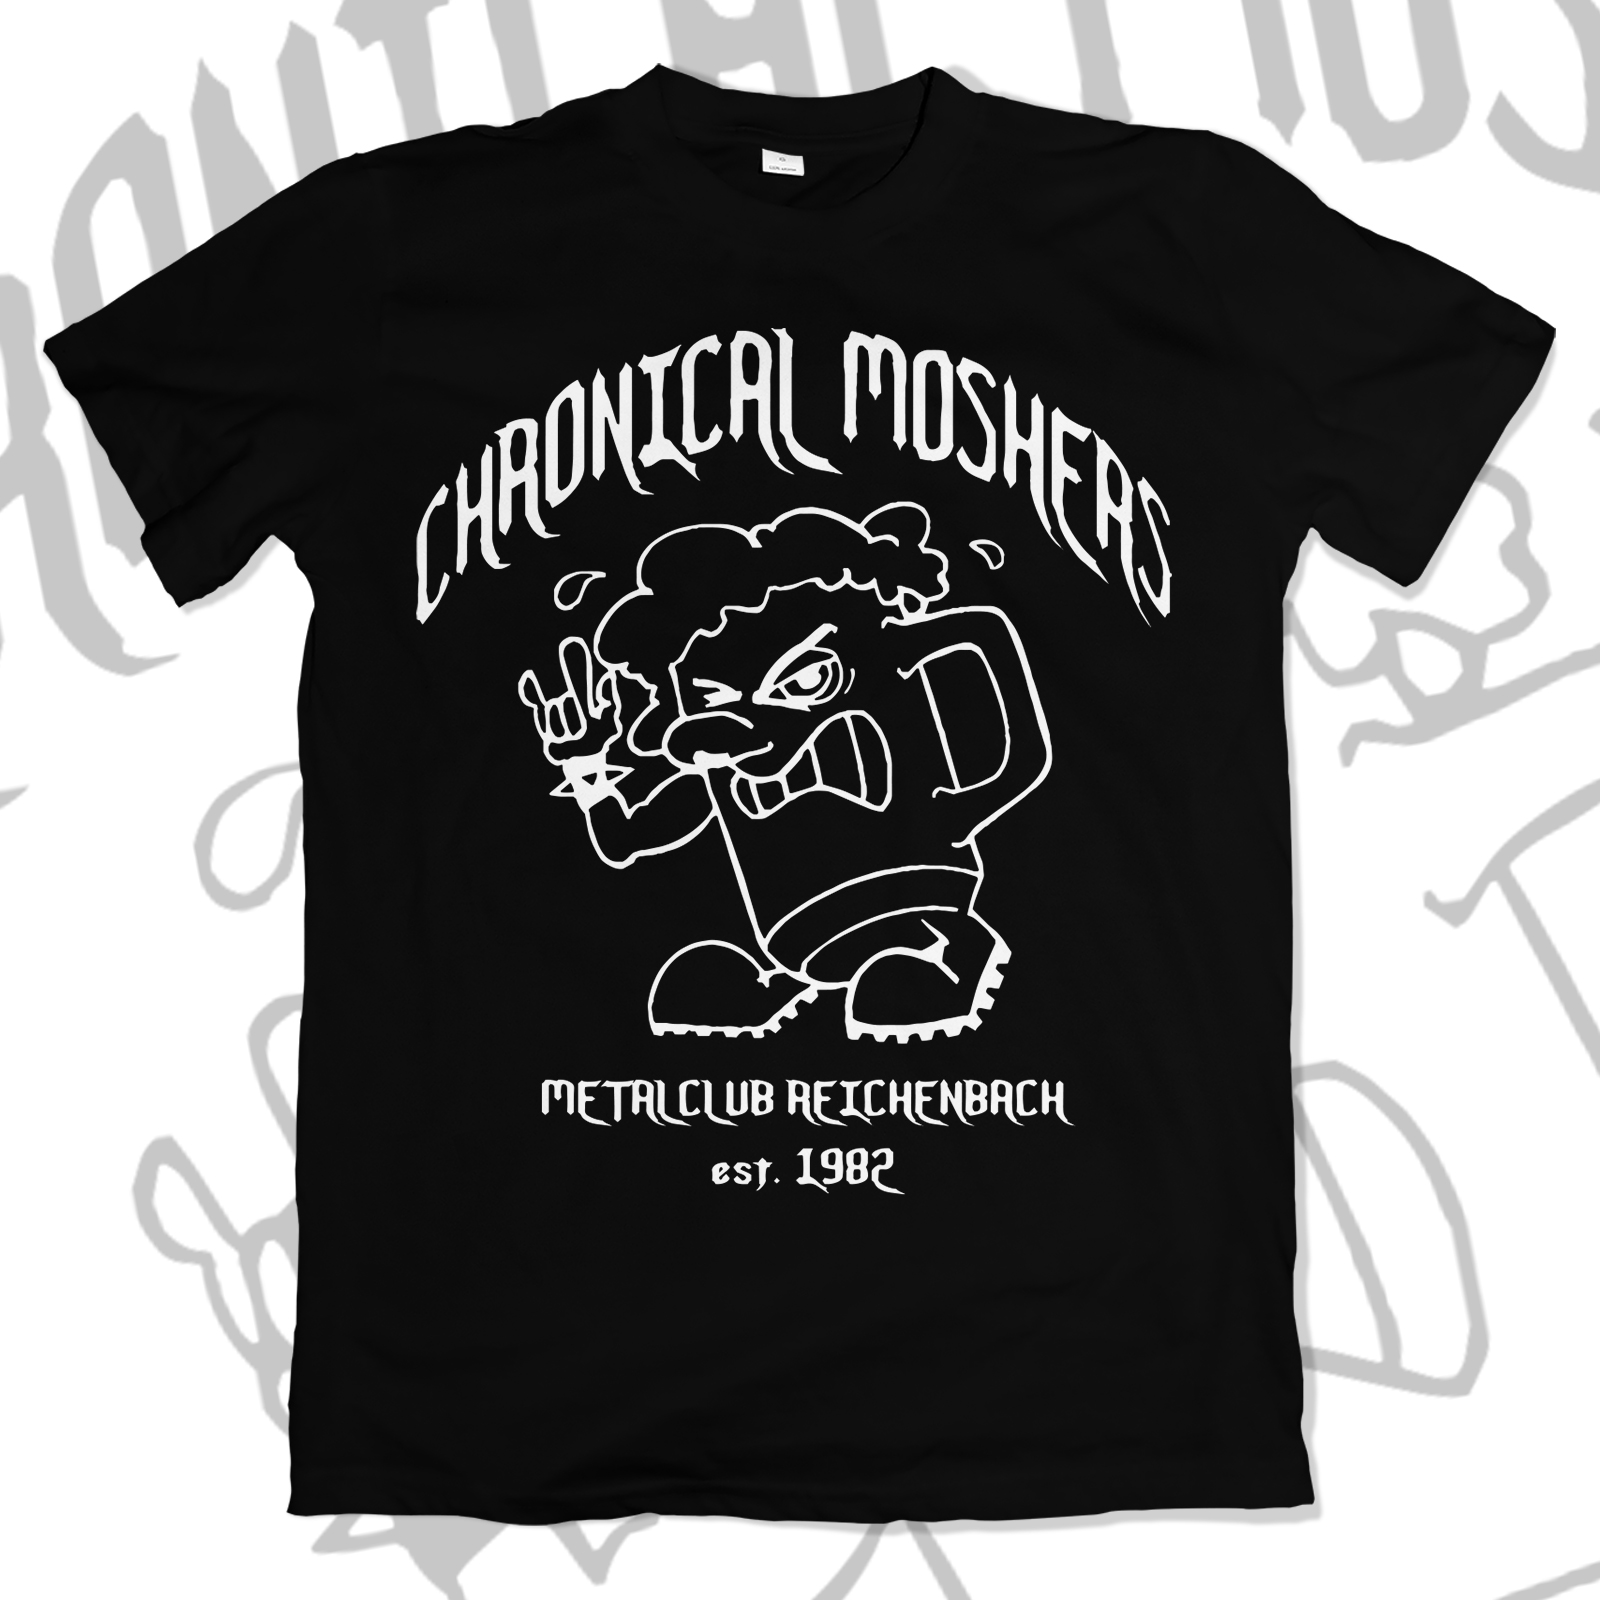 CHRONICAL MOSHERS -  Fan T-Shirt